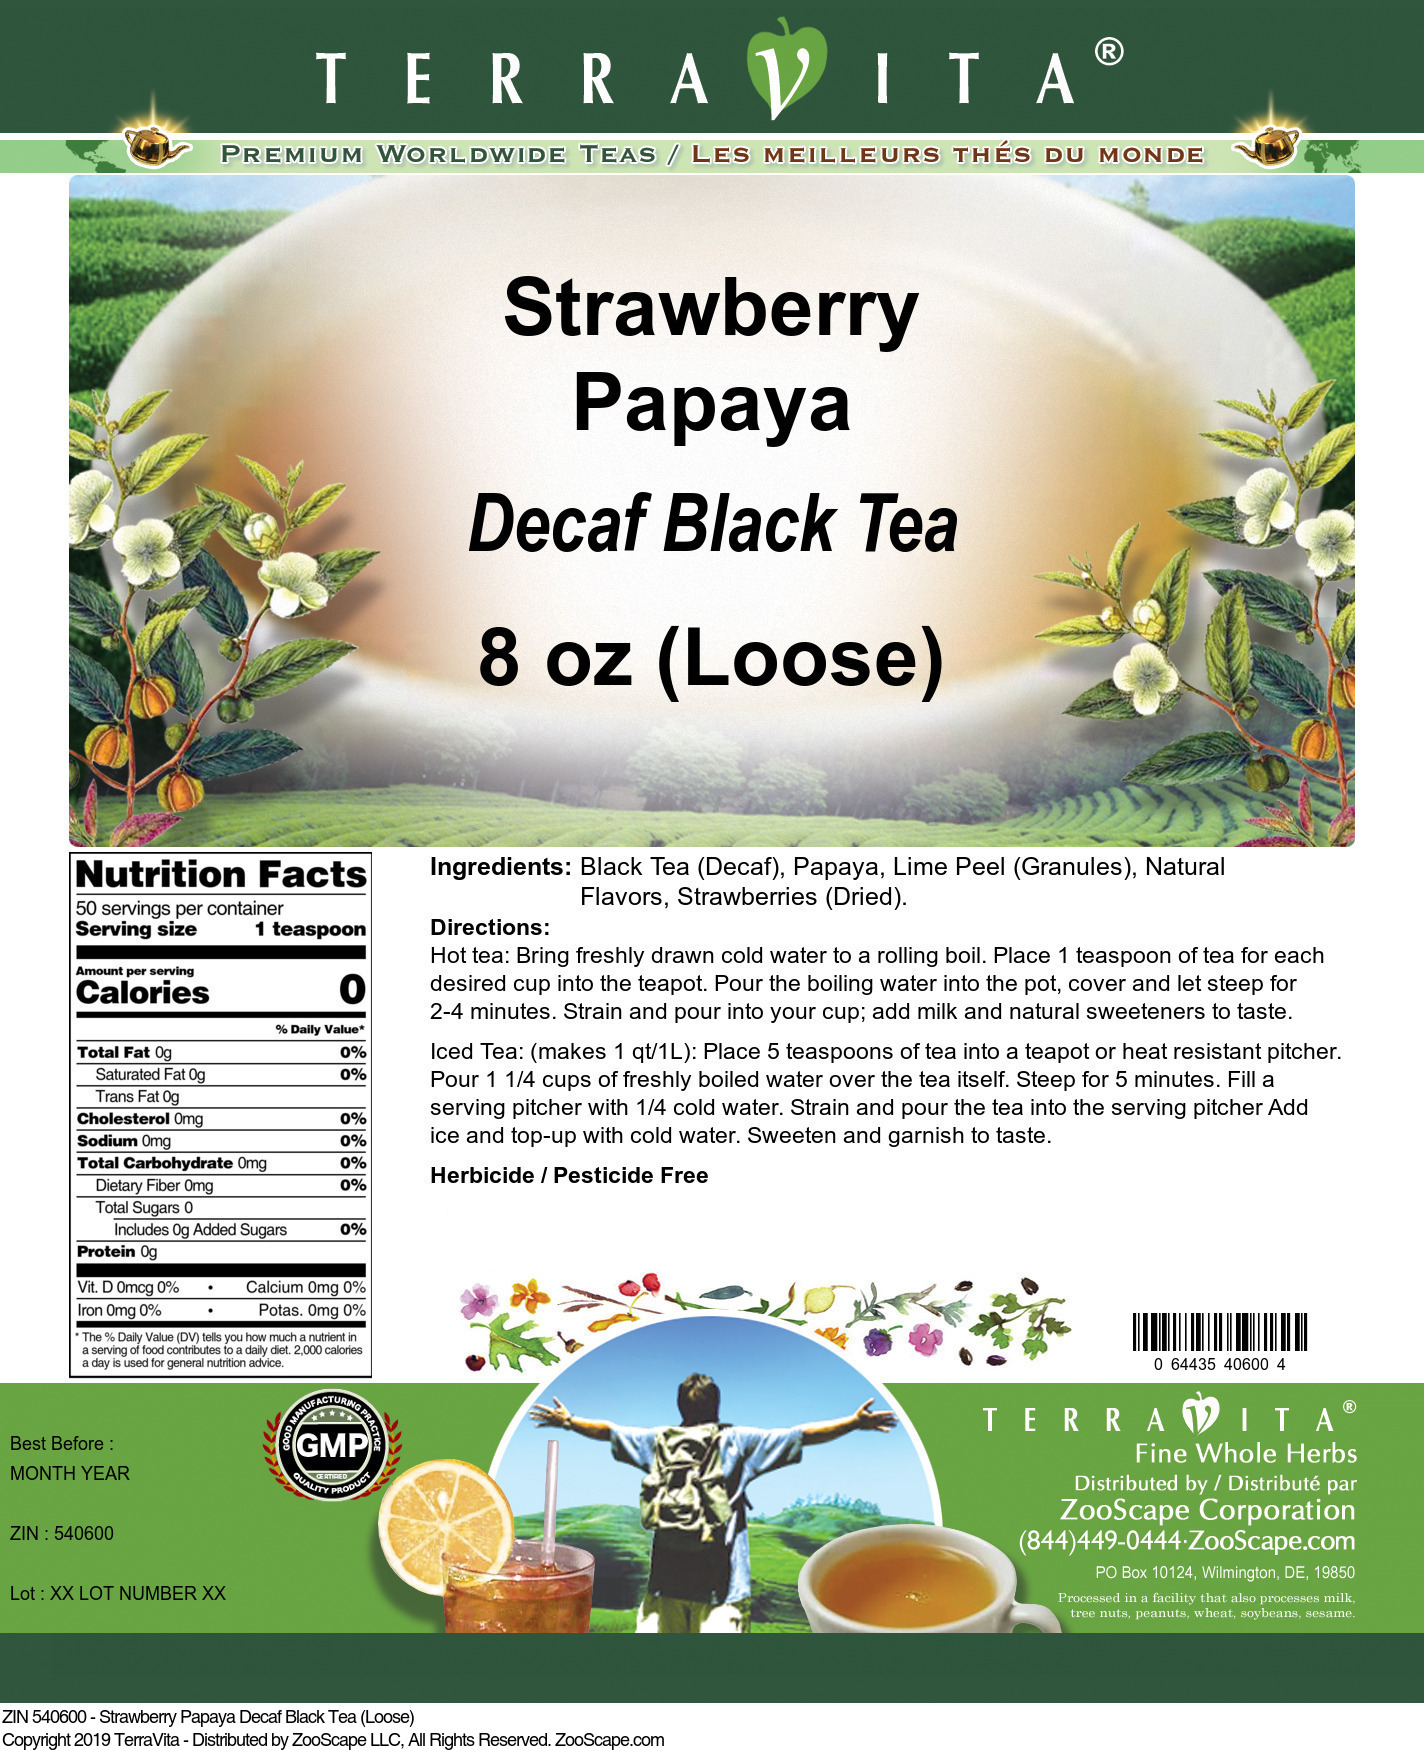 Strawberry Papaya Decaf Black Tea (Loose) - Label